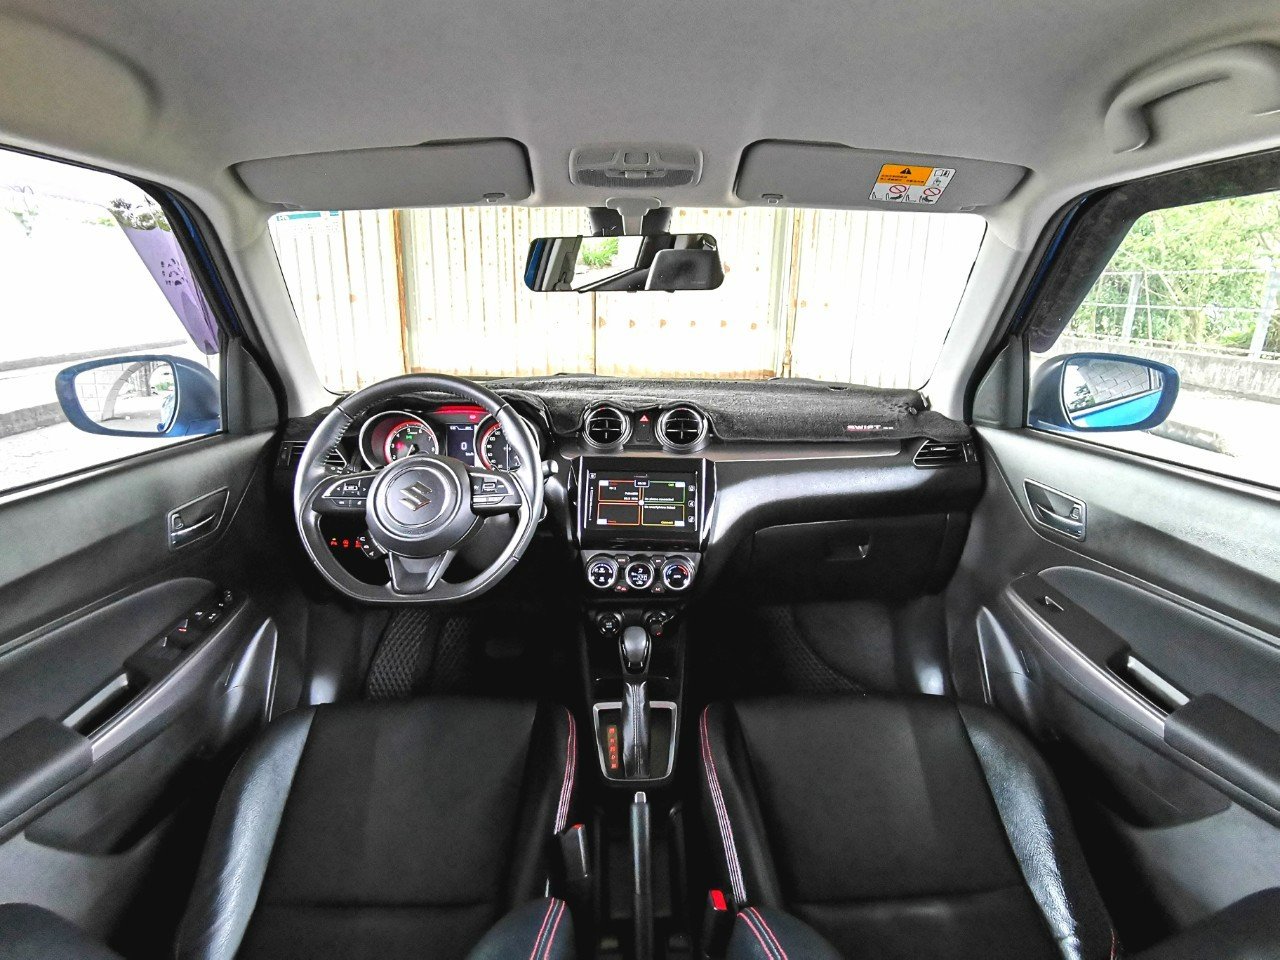 2020 Suzuki swift 1.2 輕油電 - 中古車買賣專門店-SUM認證車庫